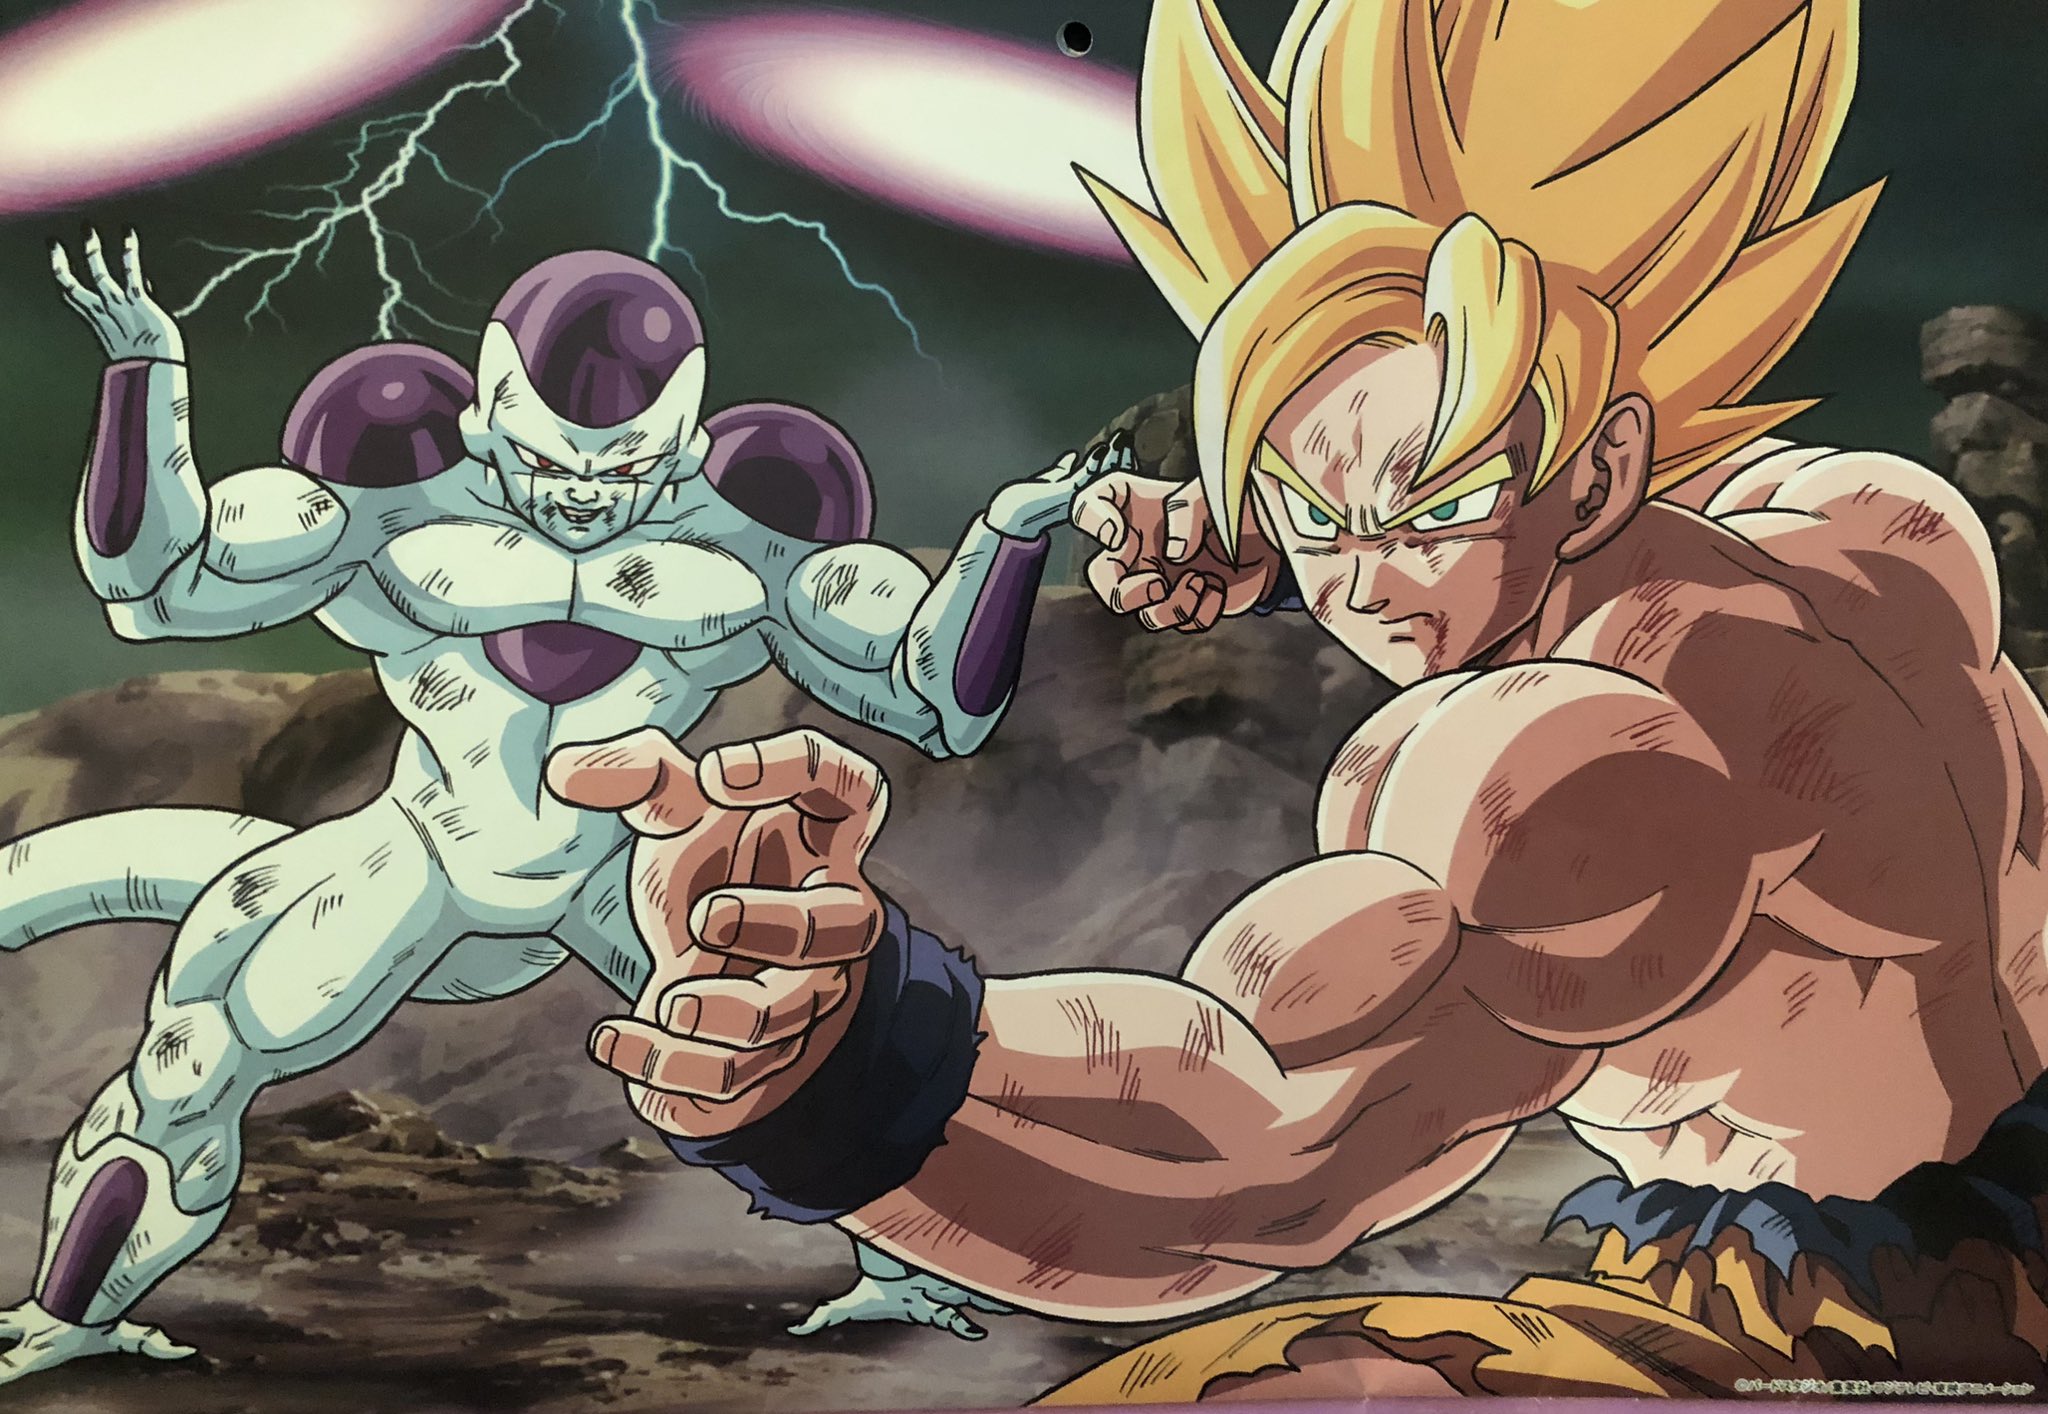 Geijitsu Ryumeru on X: "Goku SSJ VS Freezer illustration from Dragon Ball  Kai 2010 calendar https://t.co/1sMVXOqUDv" / X